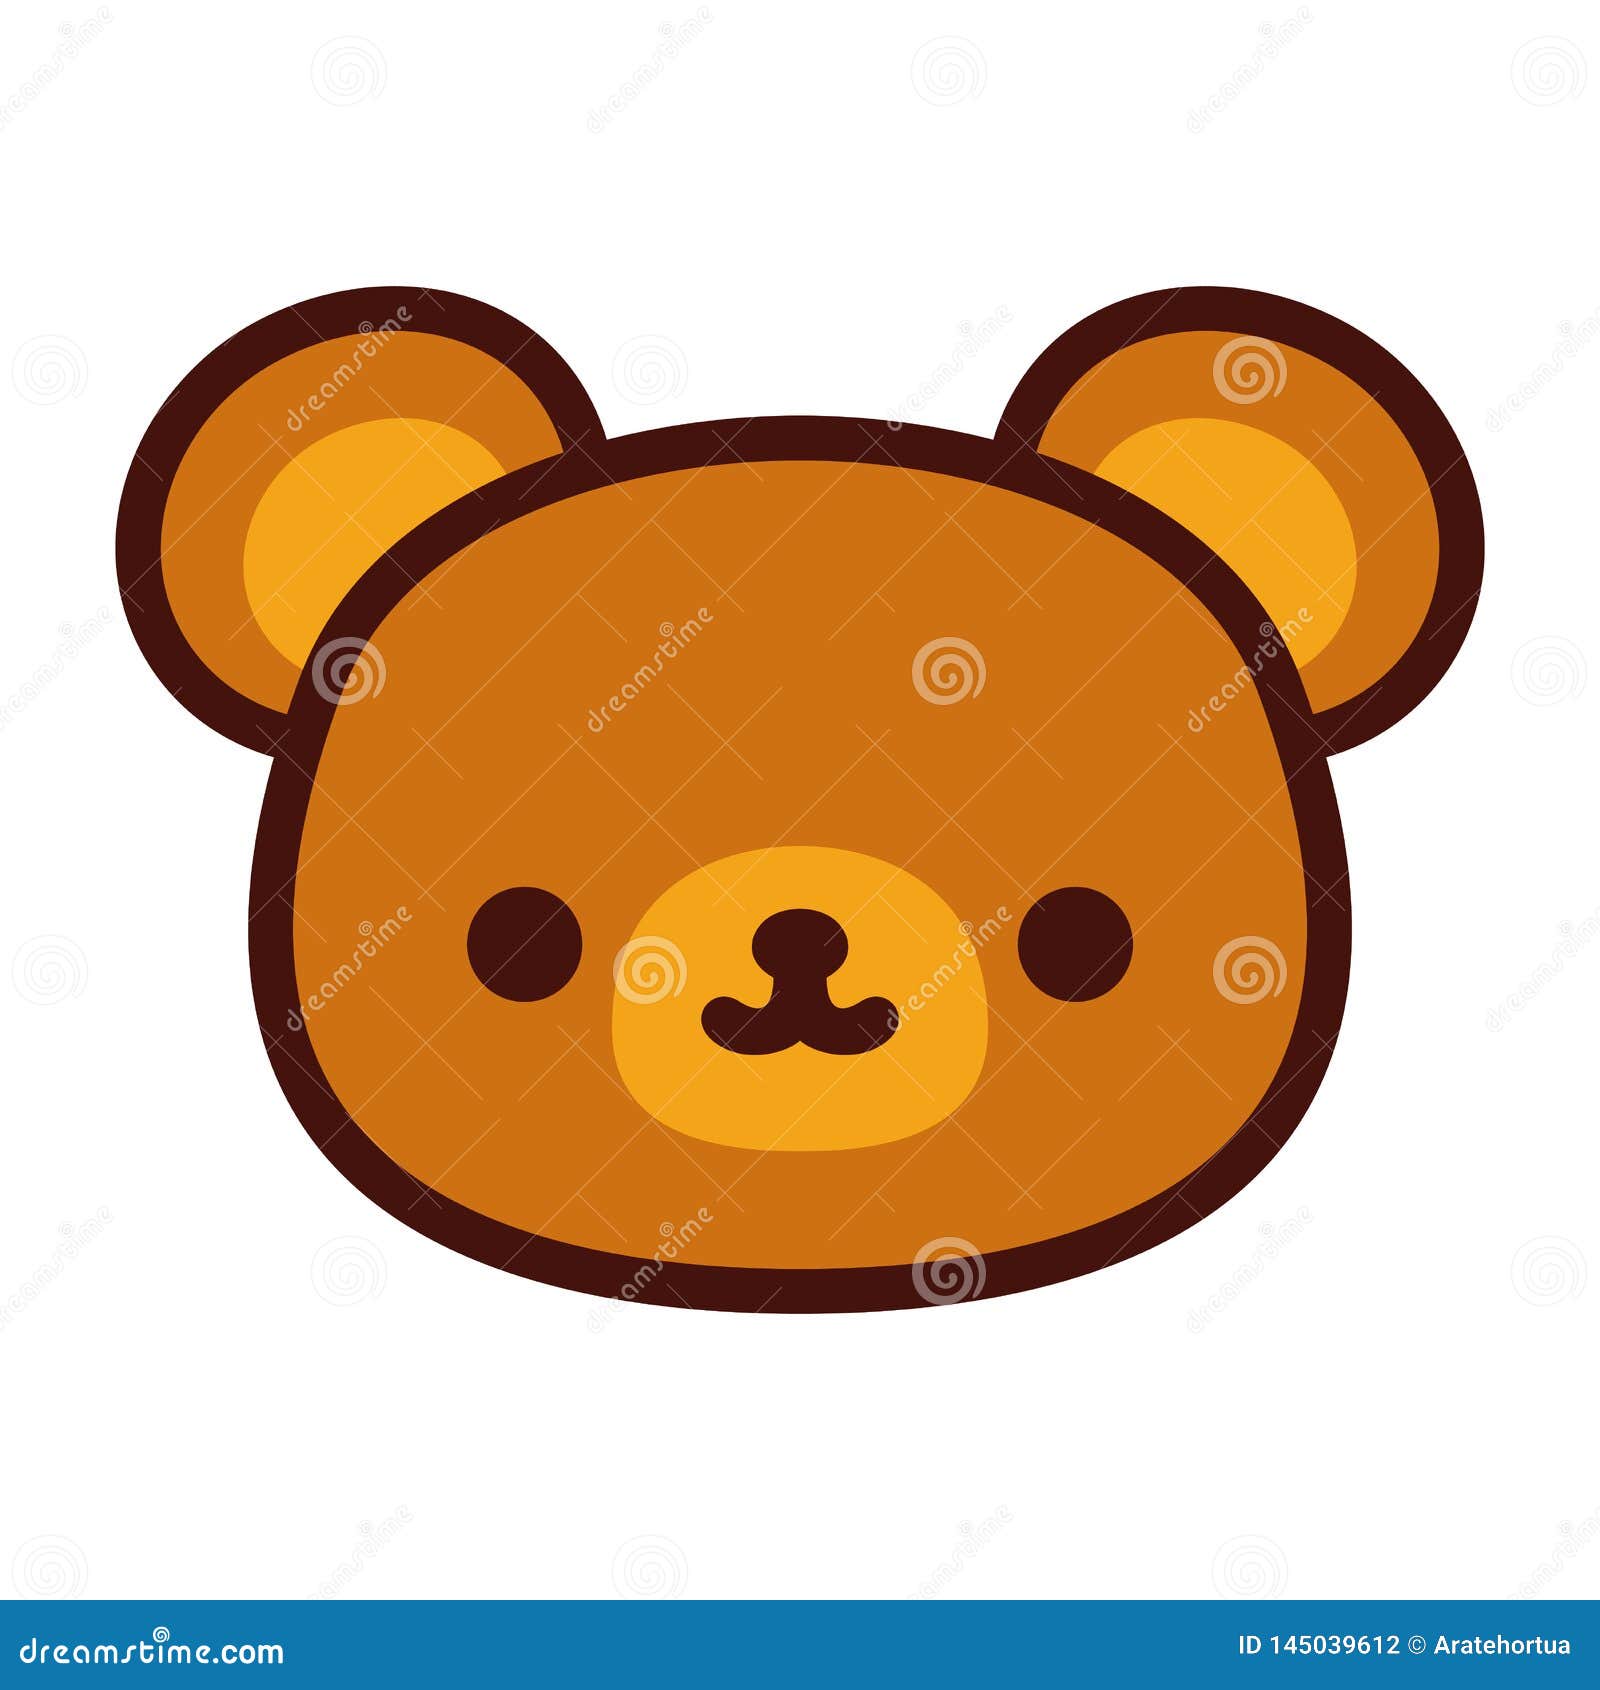 cartoon bear face